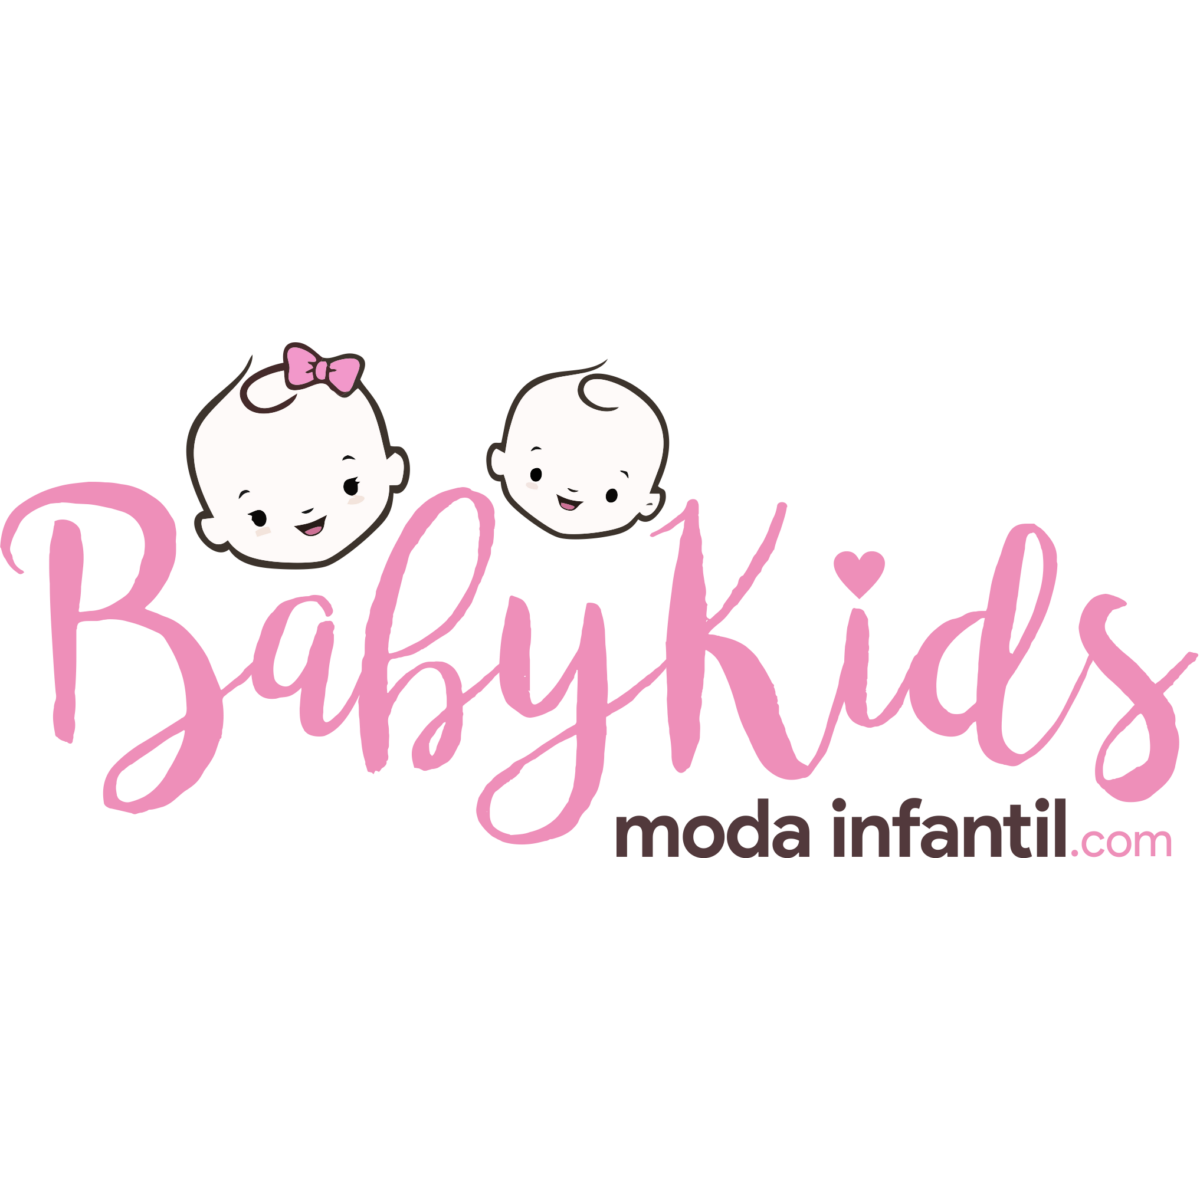 Baby Kids Moda Infantil Logo